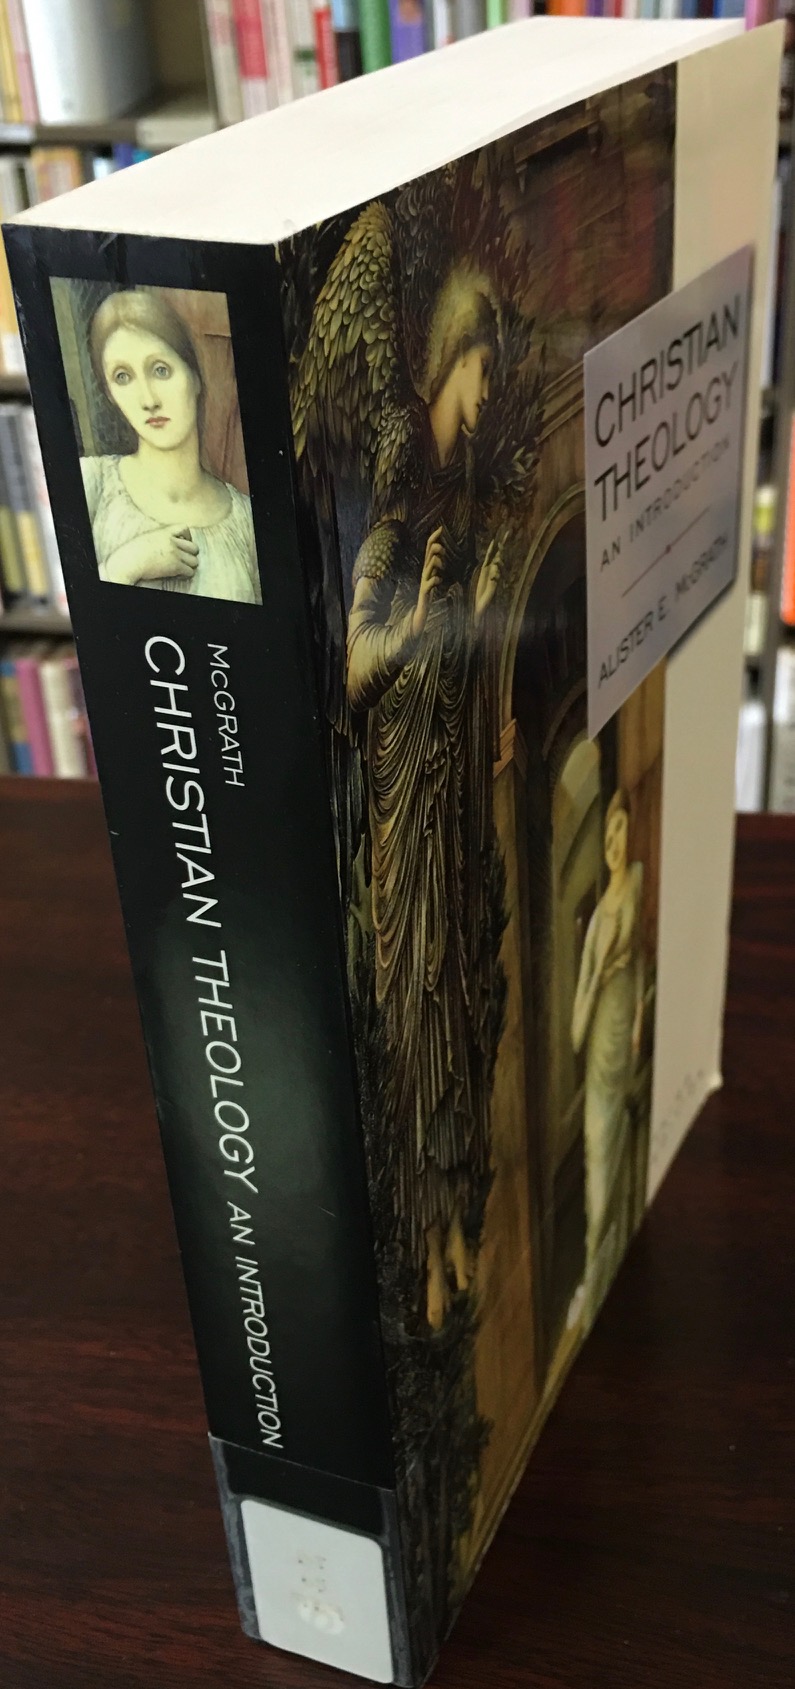 Christian Theology: An Introduction - 3rd Edition